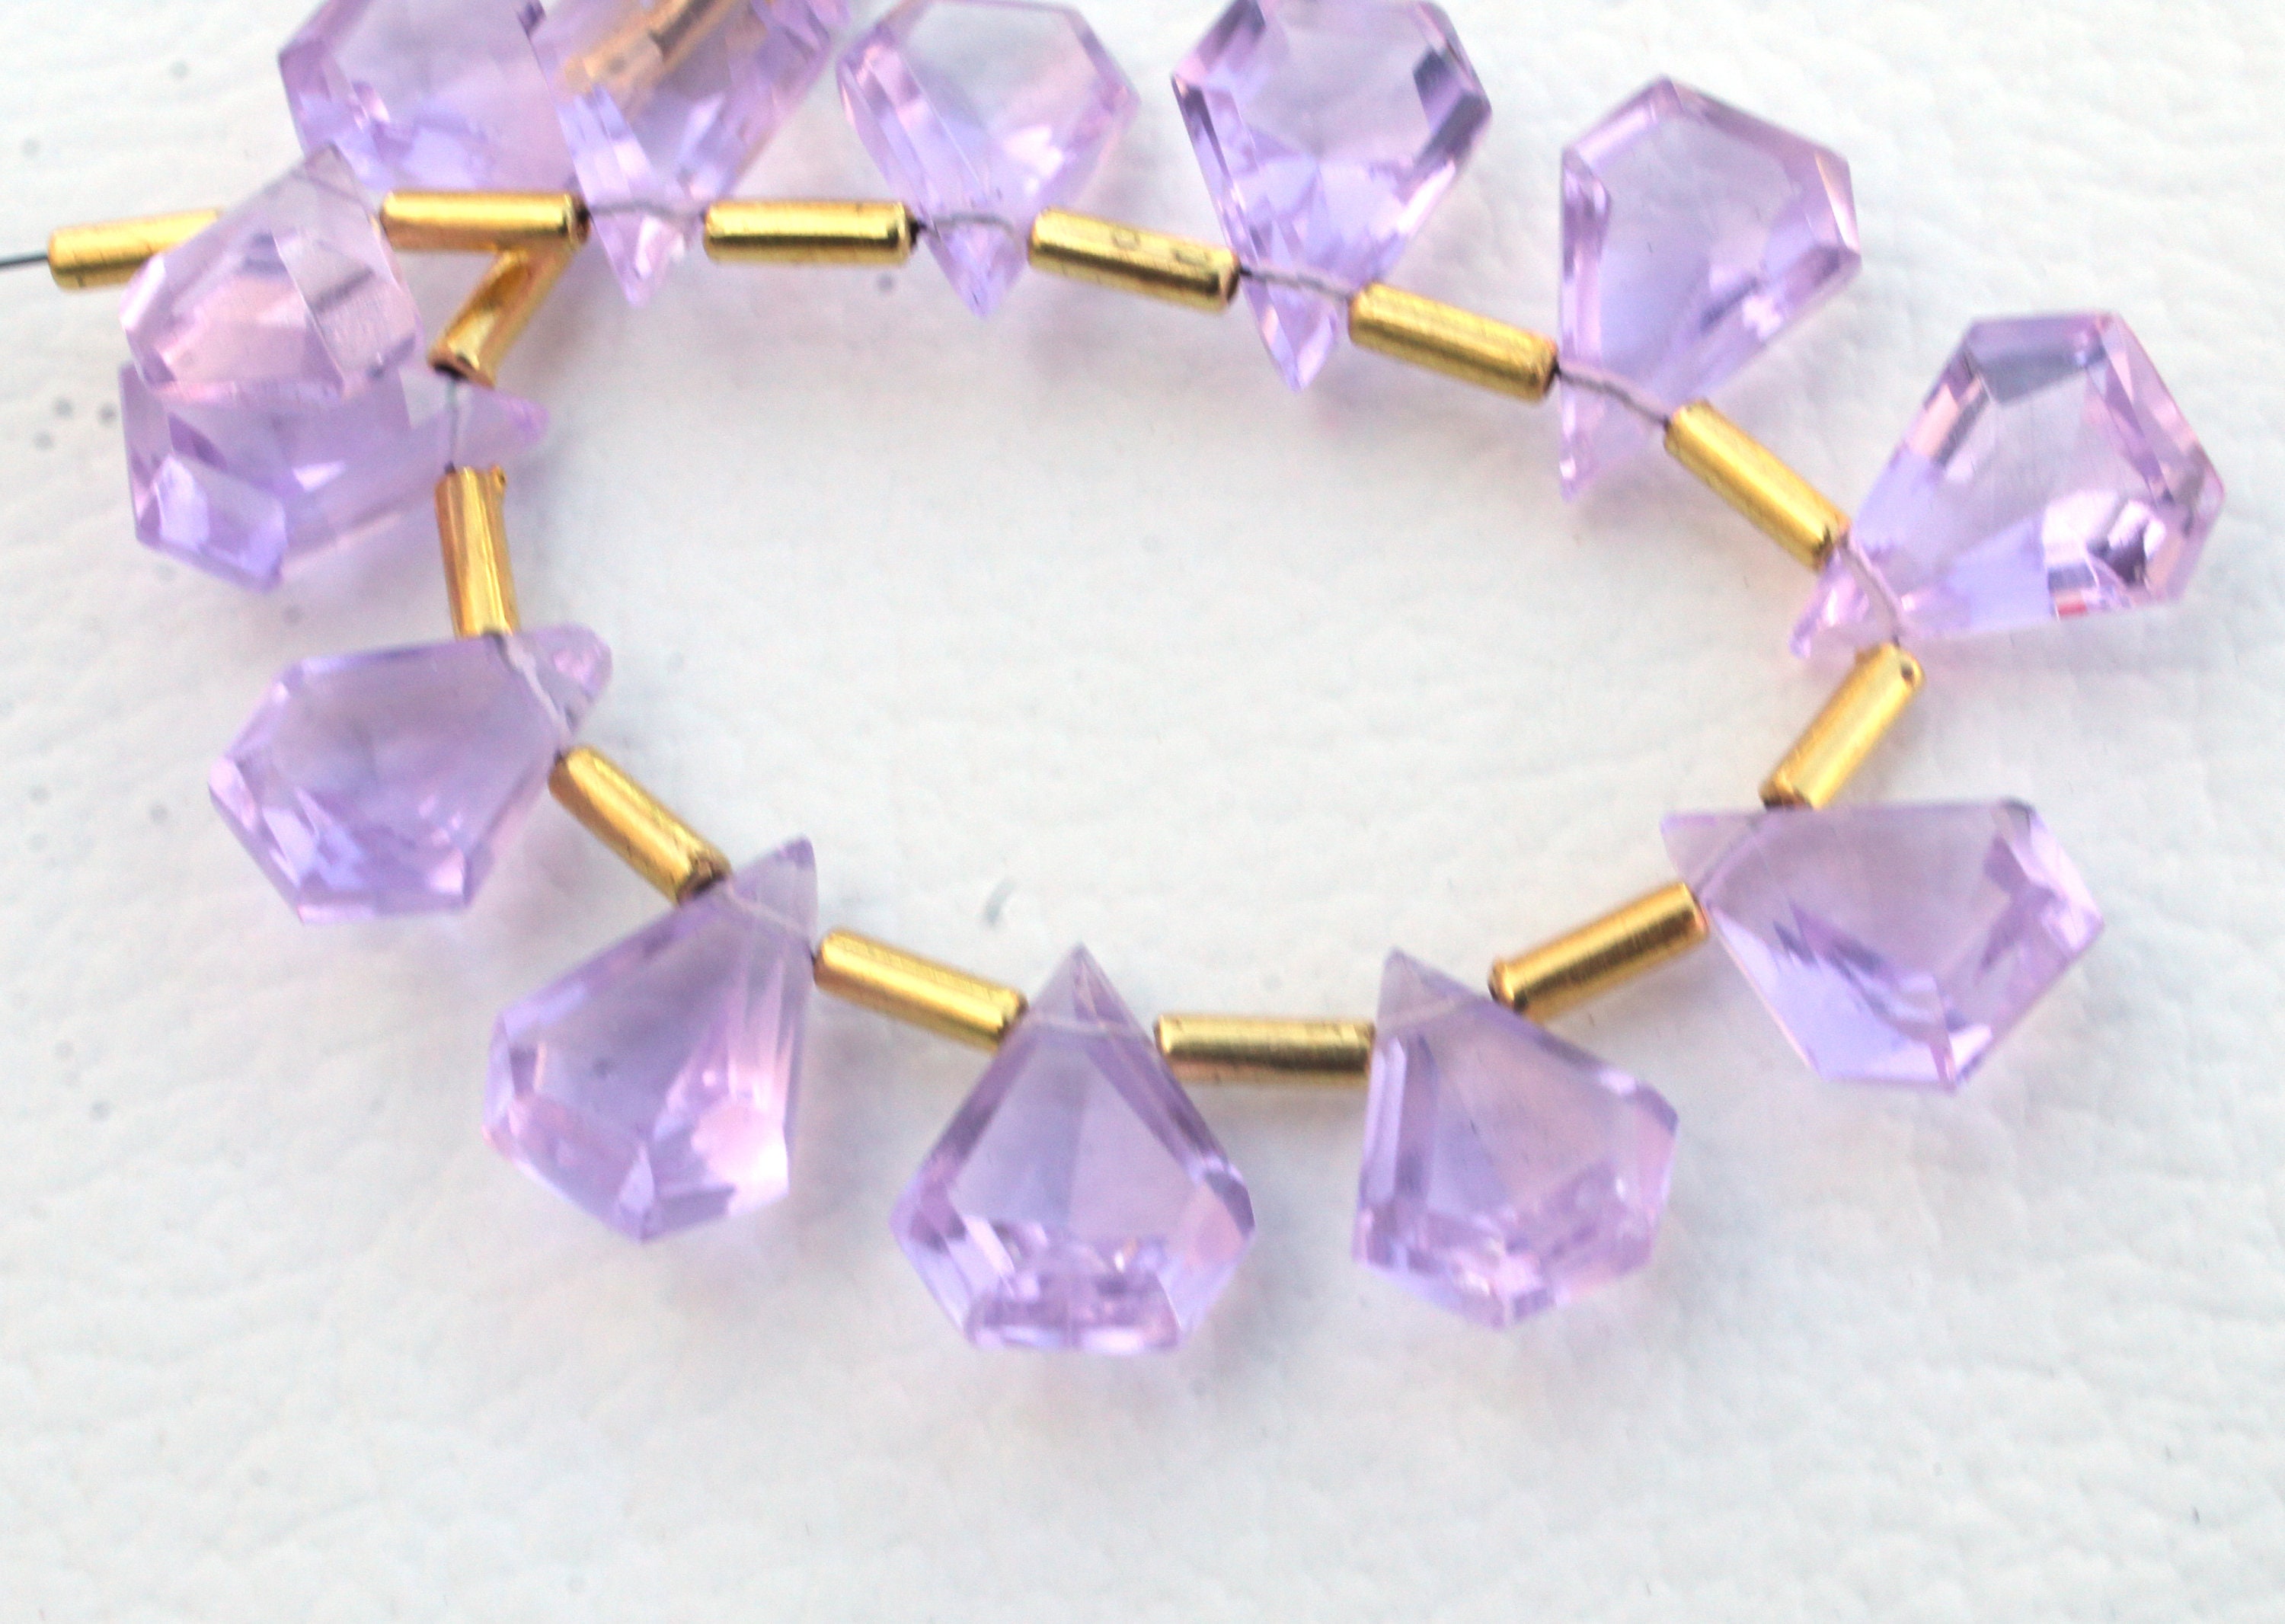 10 pieces lavender quartz gemstone drilled gemstone loose | Etsy